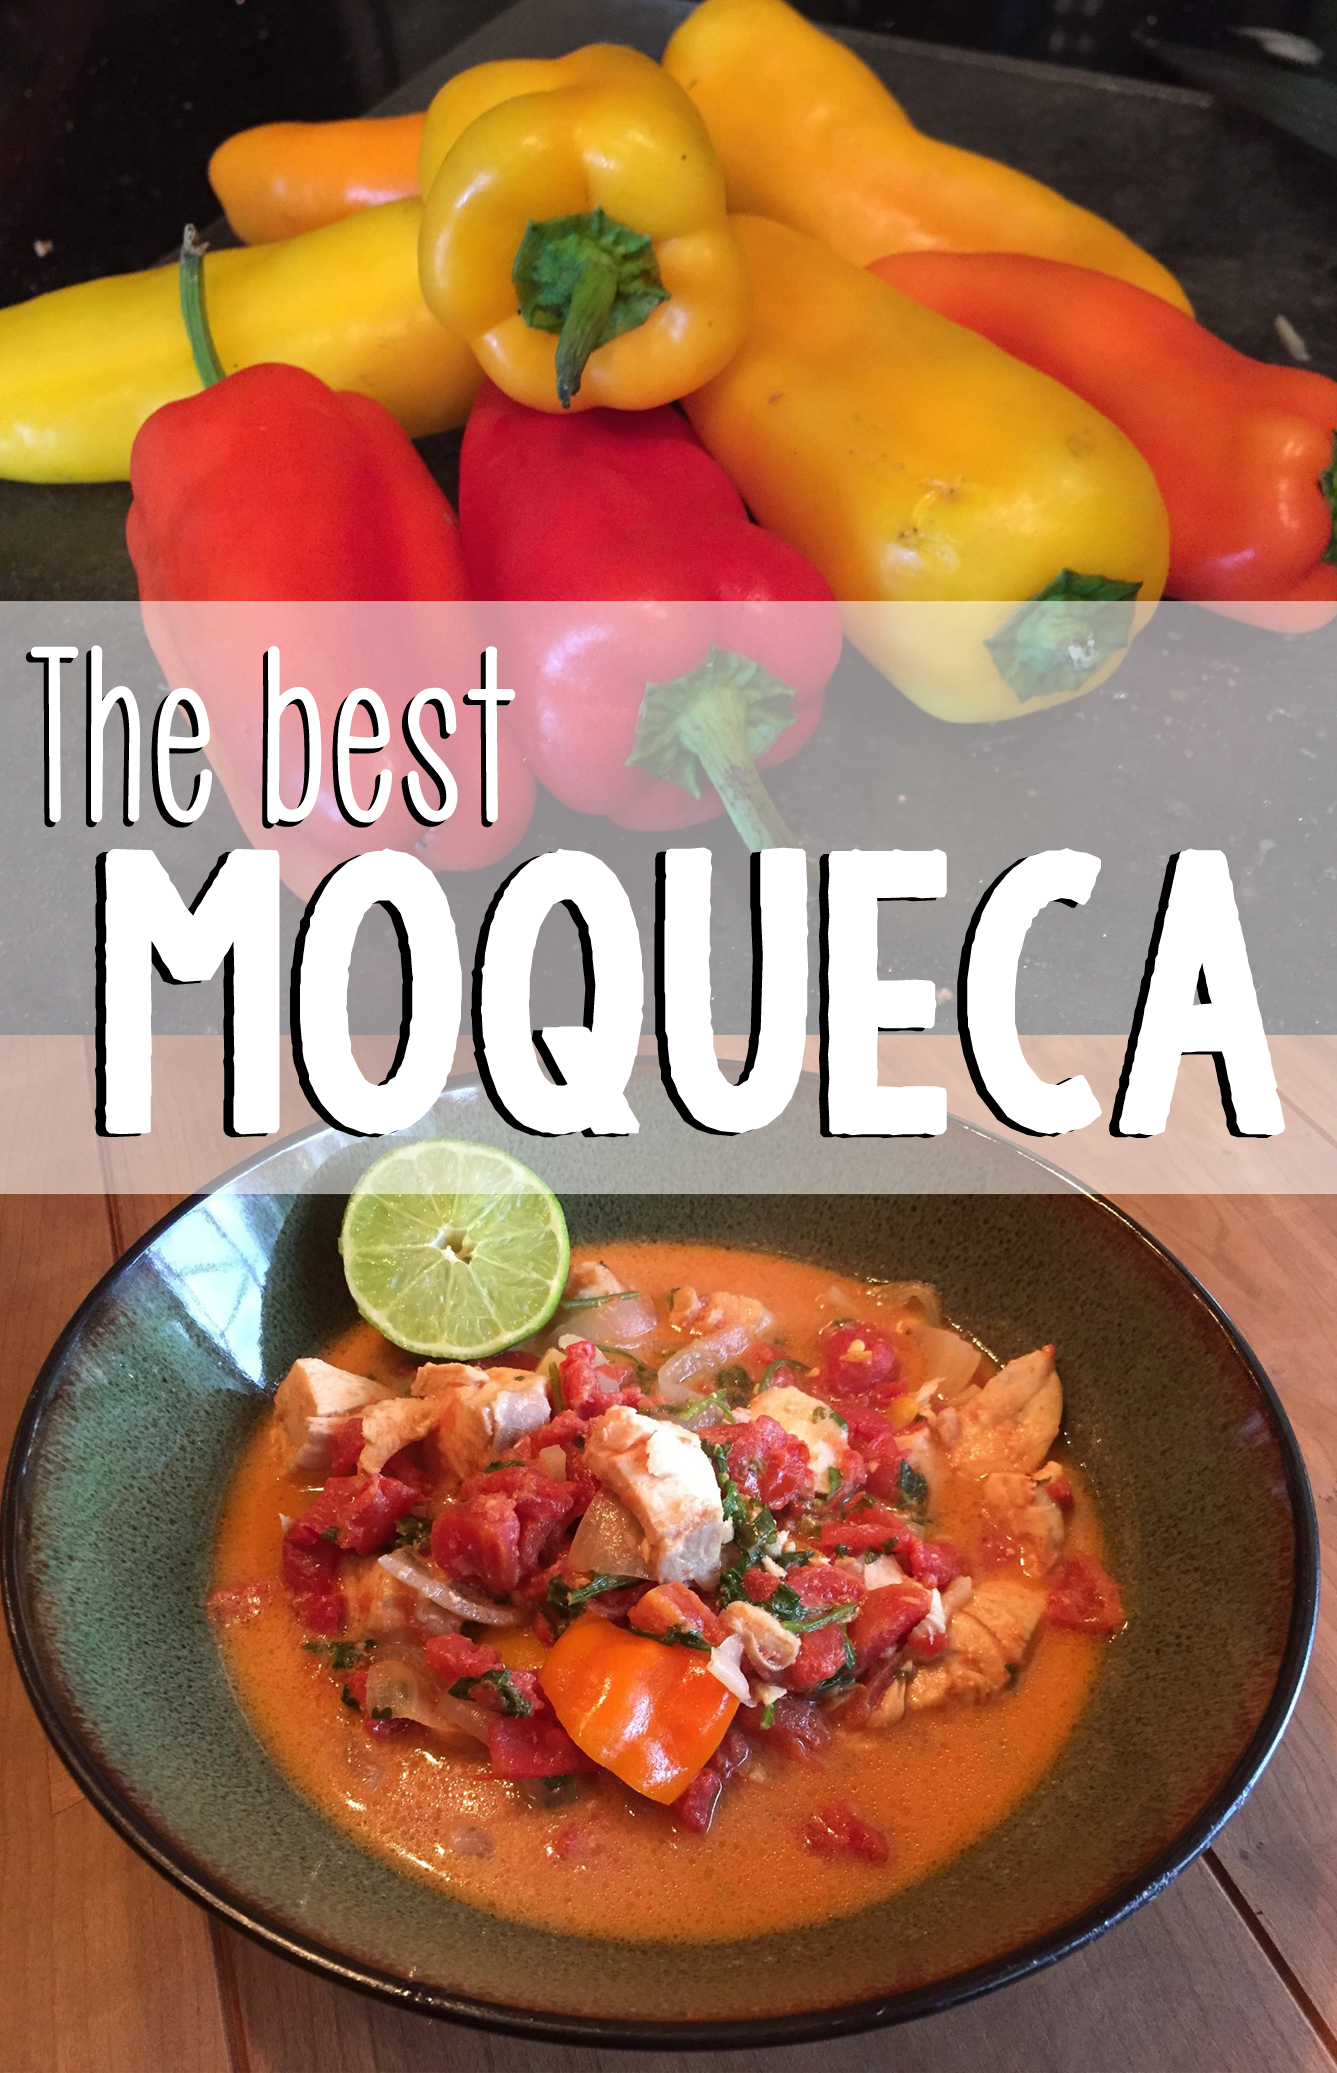 The best brazilian moqueca recipe! @caltonnutrition